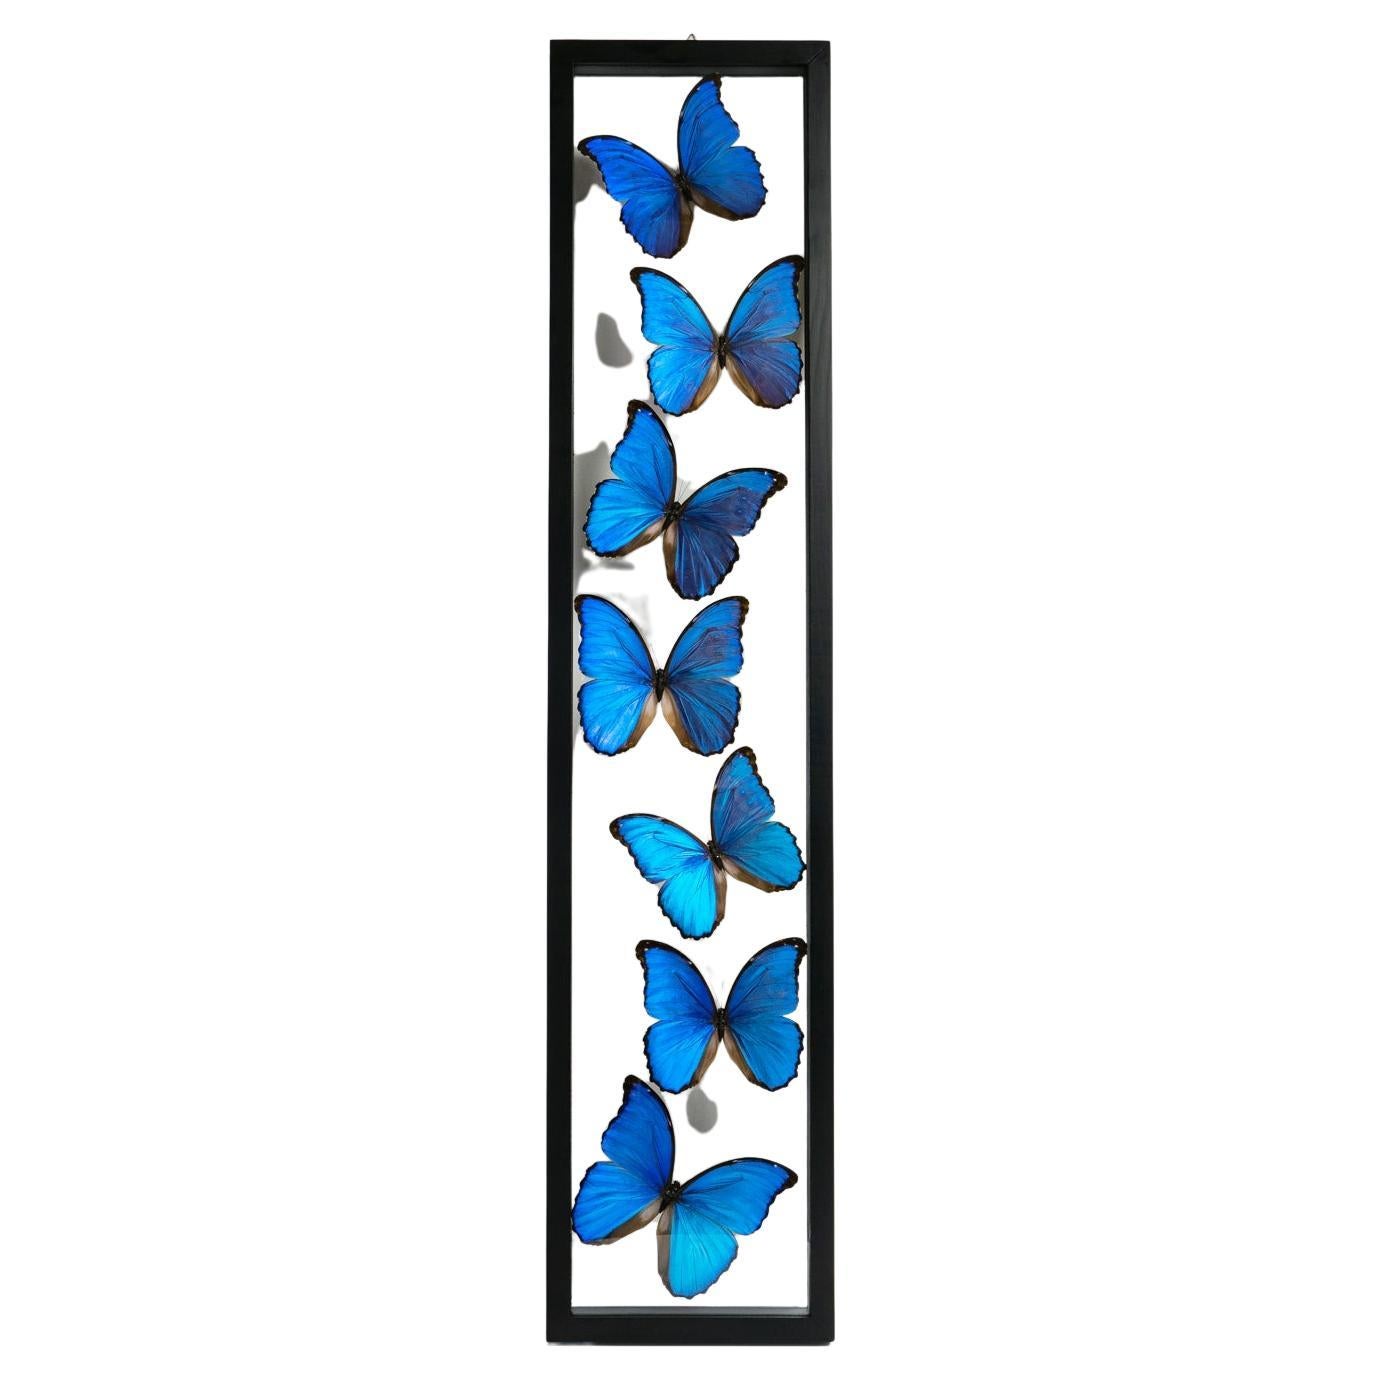 7 Real Morpho Butterflies Specimen in Display Frame